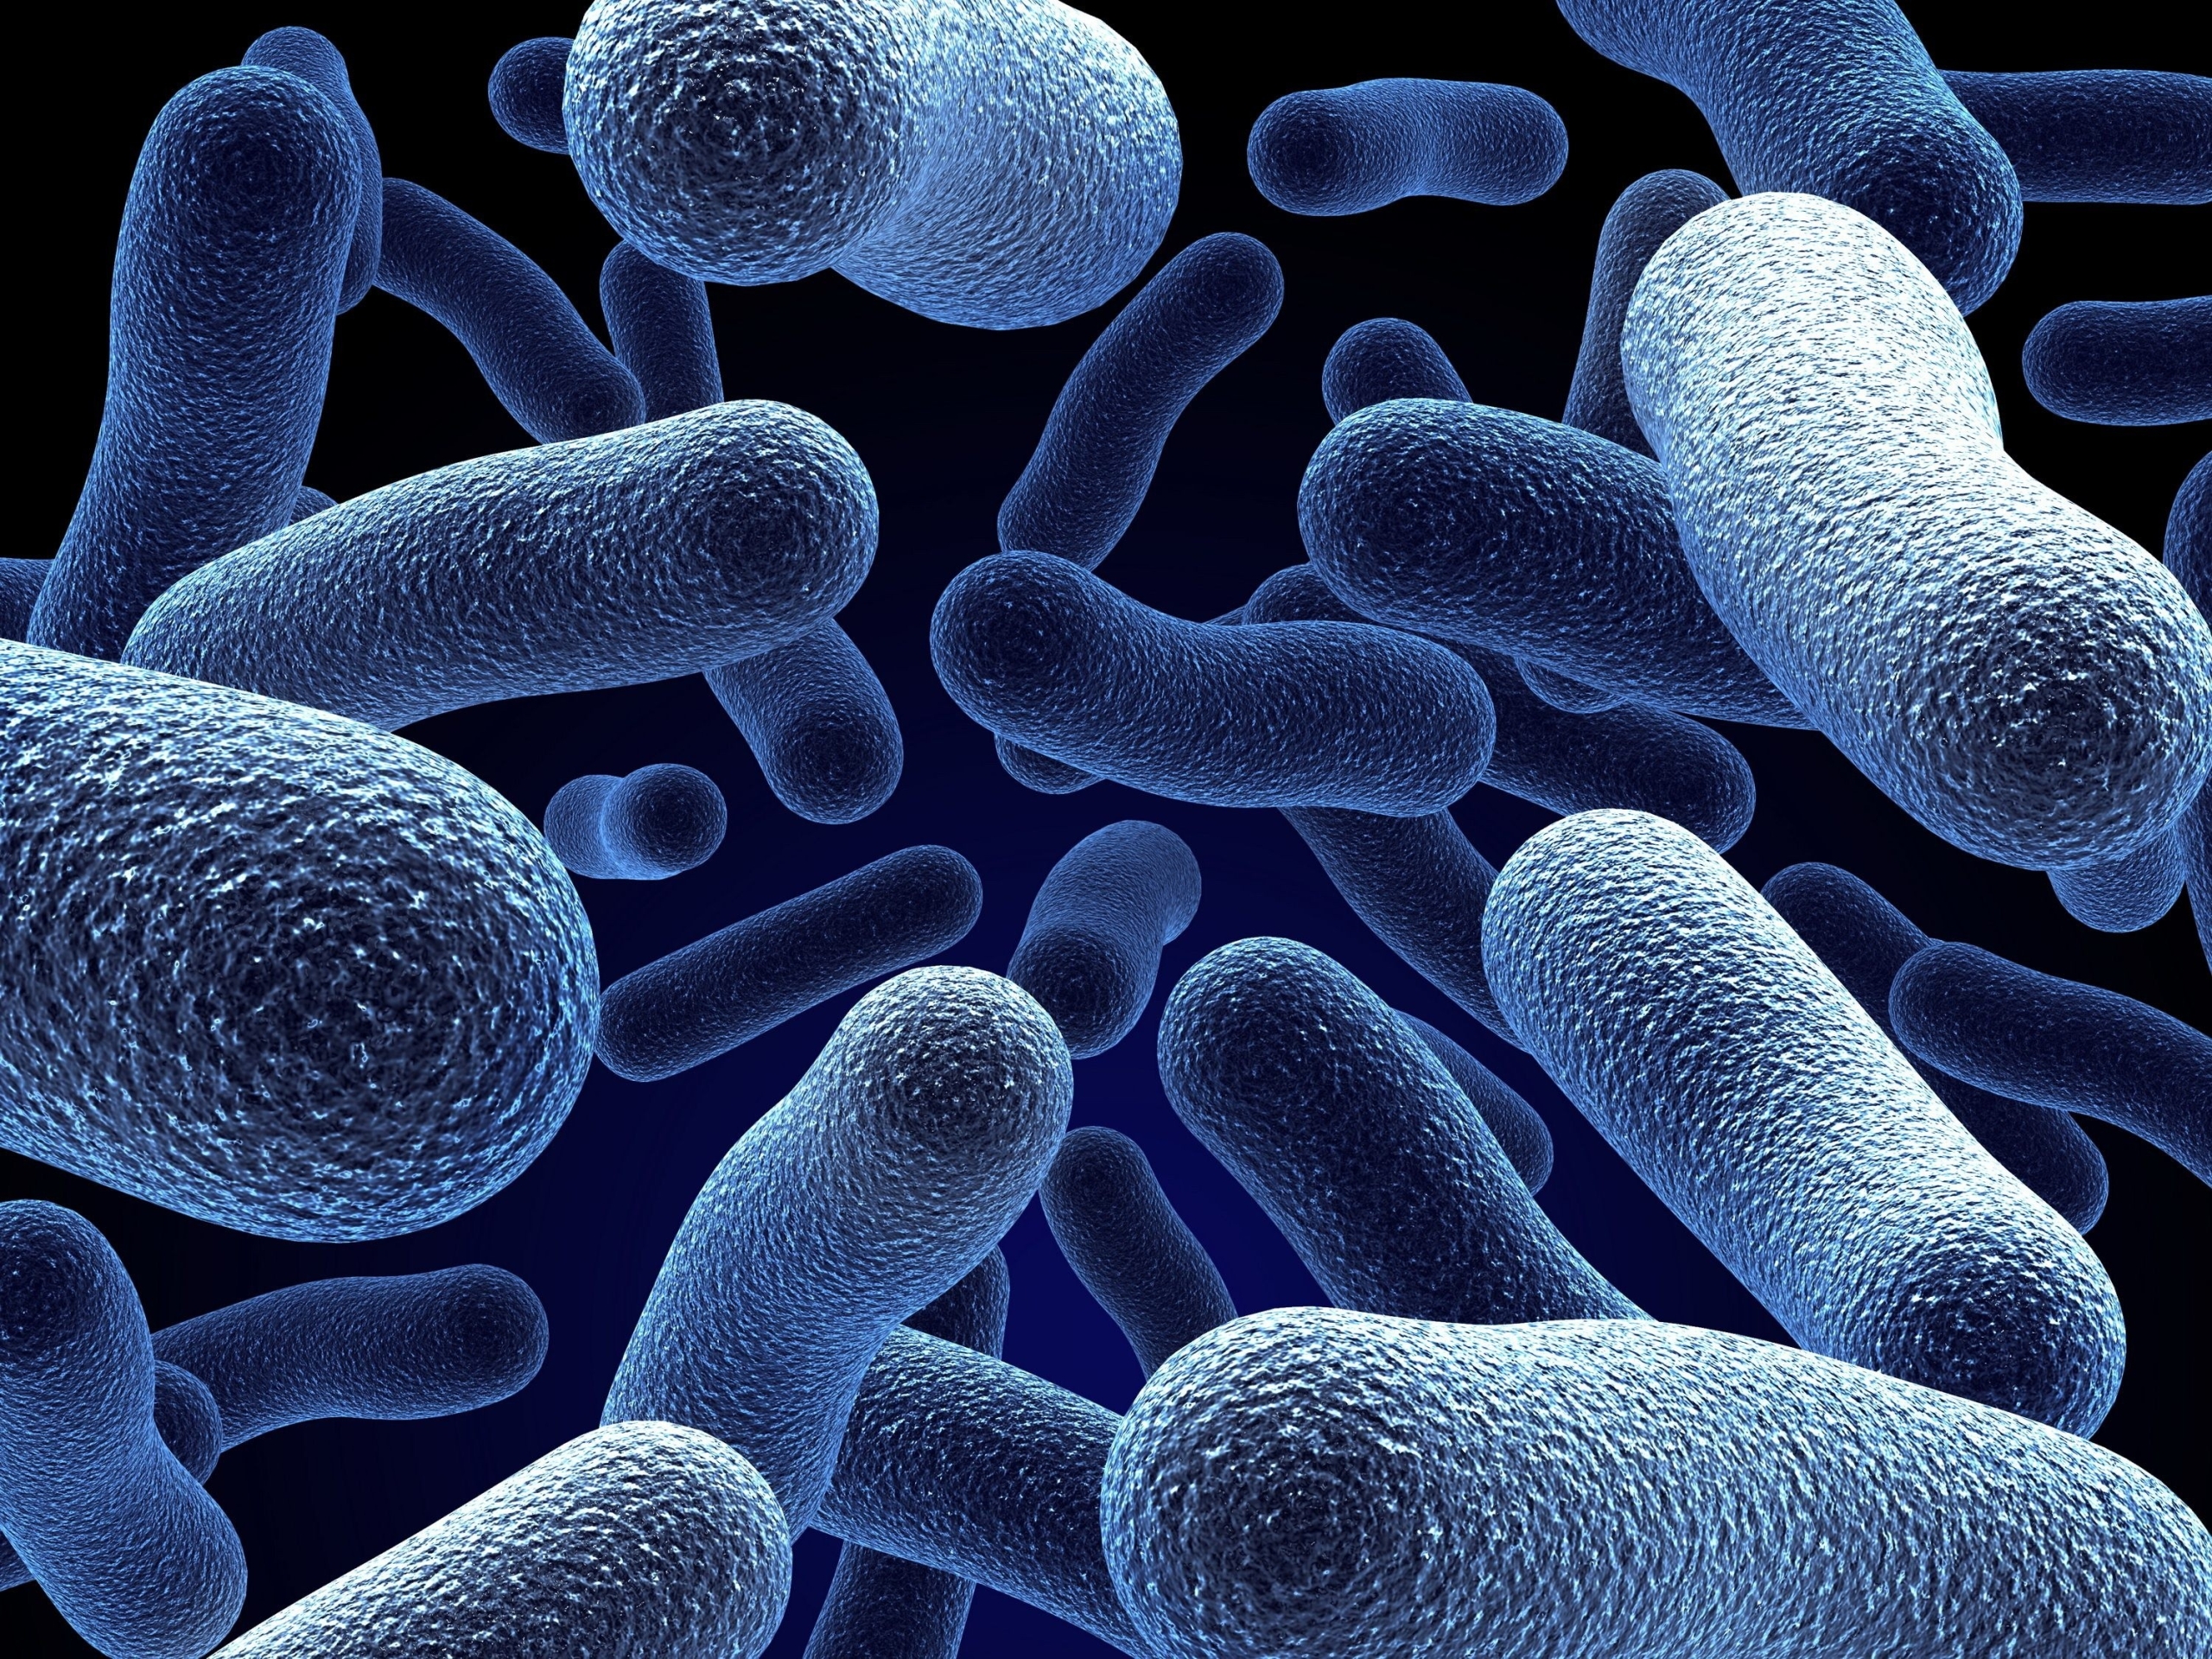 Bacteria Artwork Blue Digital Art 2560x1920